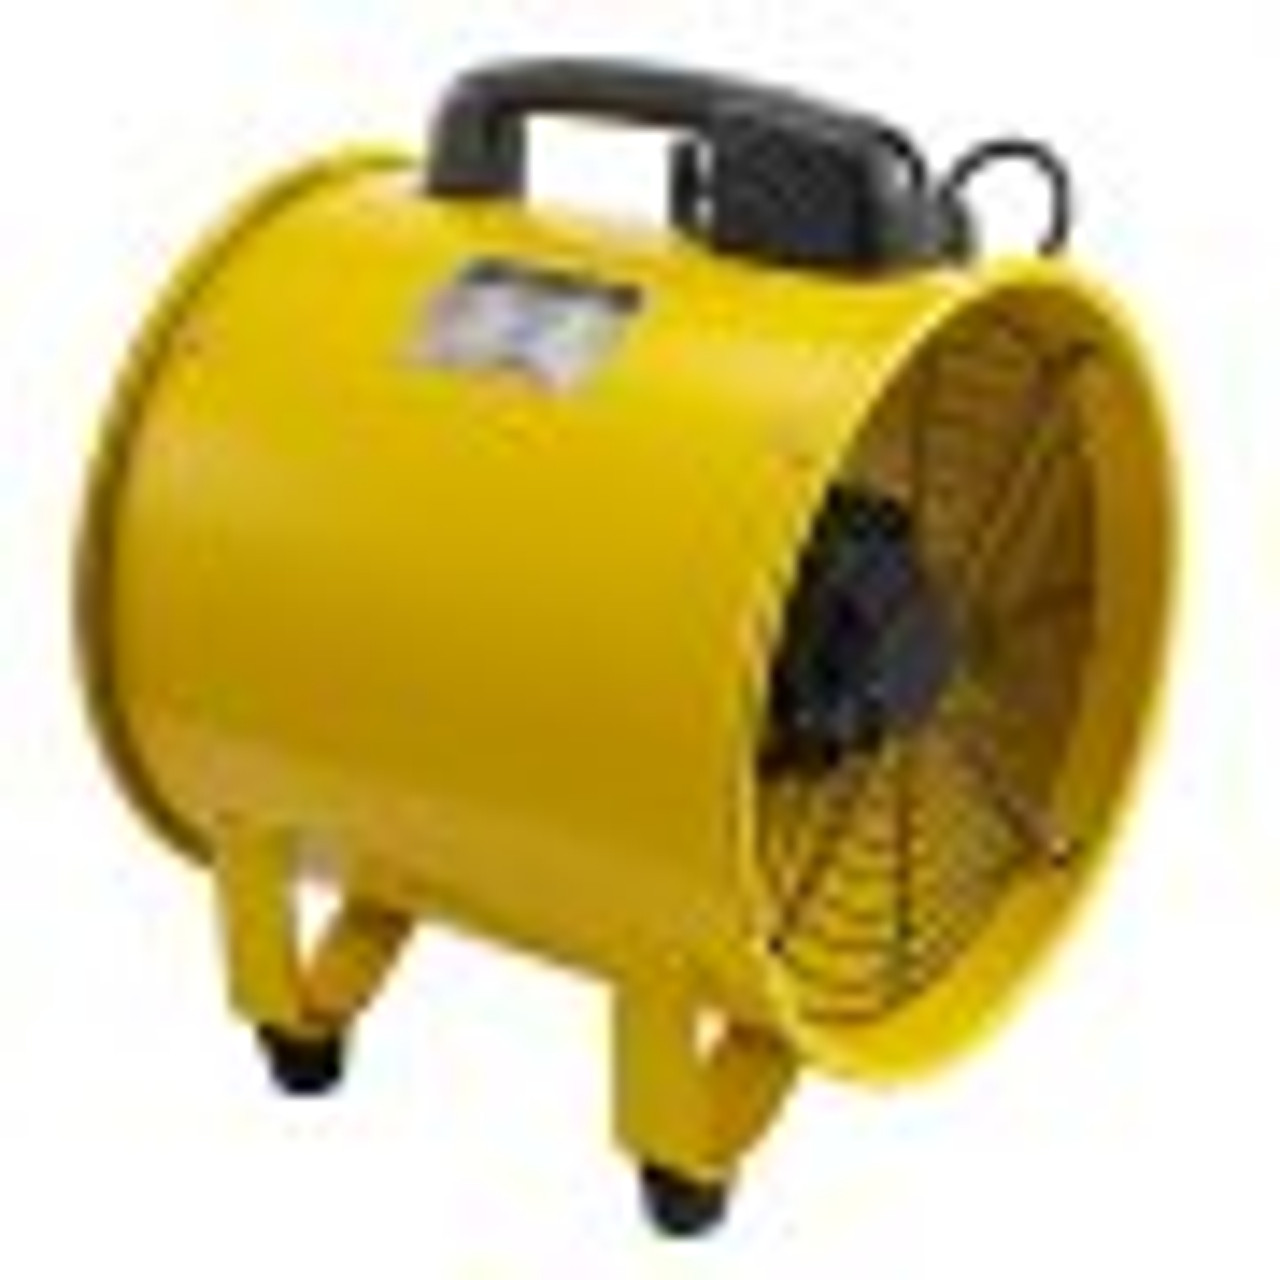 Utility Blower Fan, 12 Inches, High Velocity Ventilator, Portable